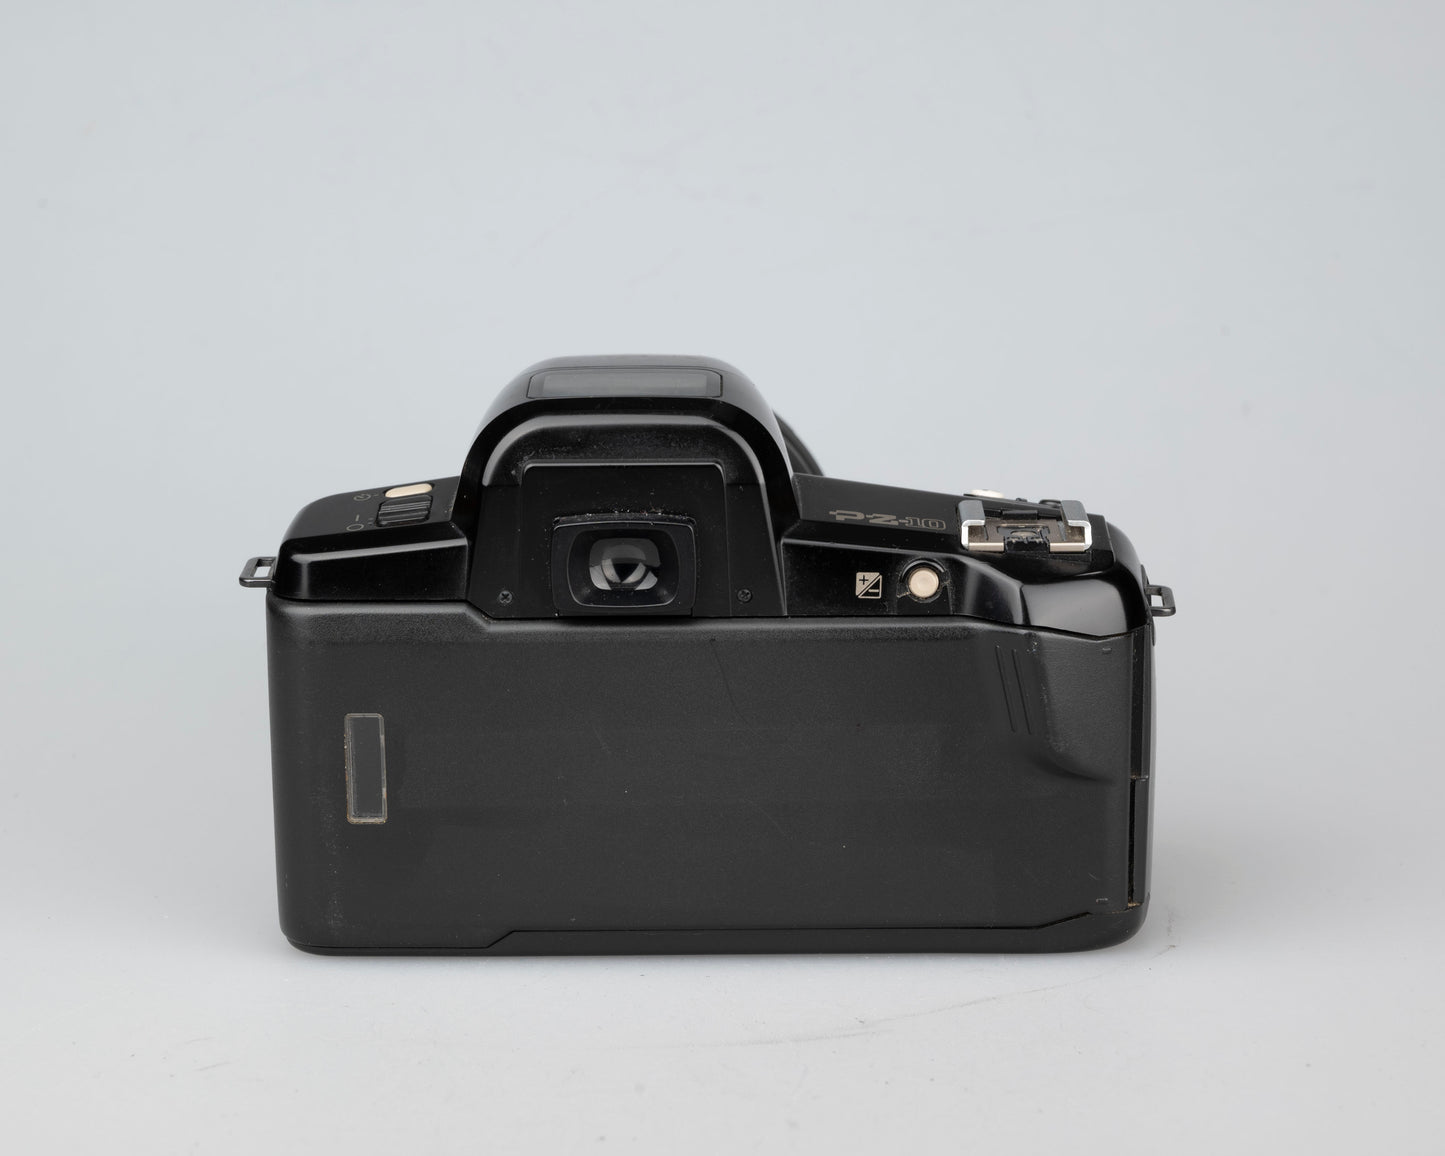 Pentax PZ-10 35mm SLR w/ Sigma 28-105mm f2.8-4 lens (serial 5708409)